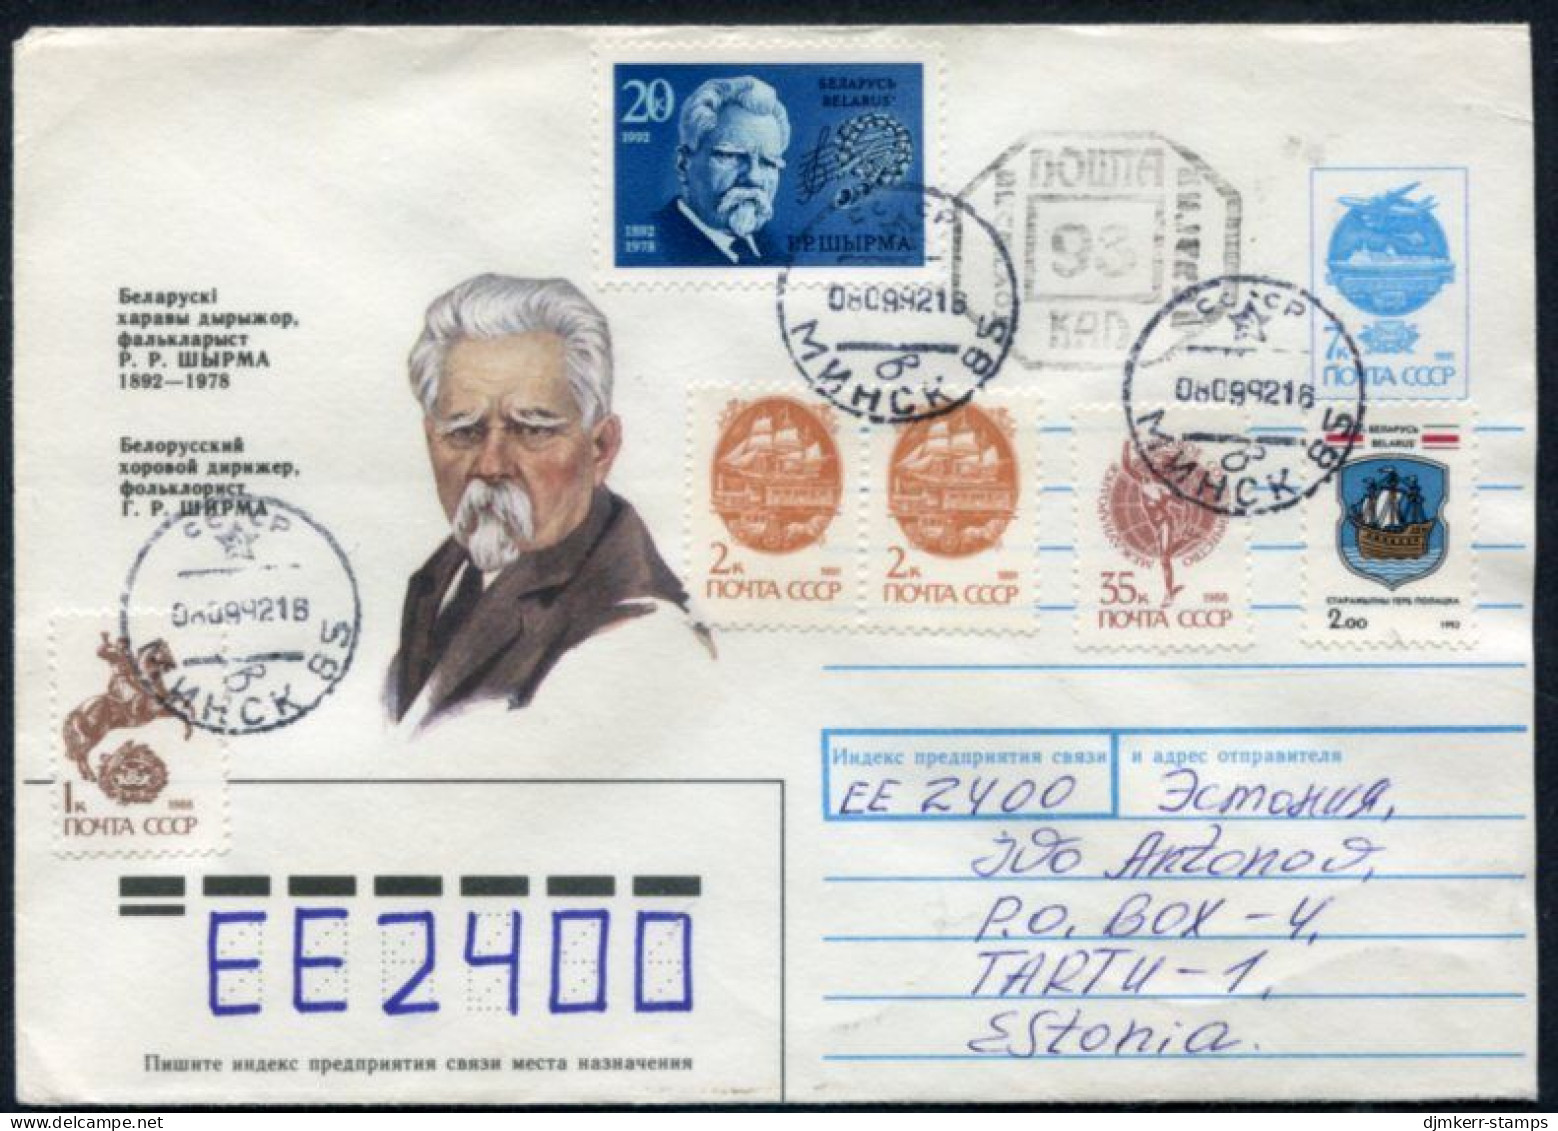 BELARUS 1992 Shyrma On Soviet Union Commemorative Stationery Envelope.  Michel 2 - Belarus